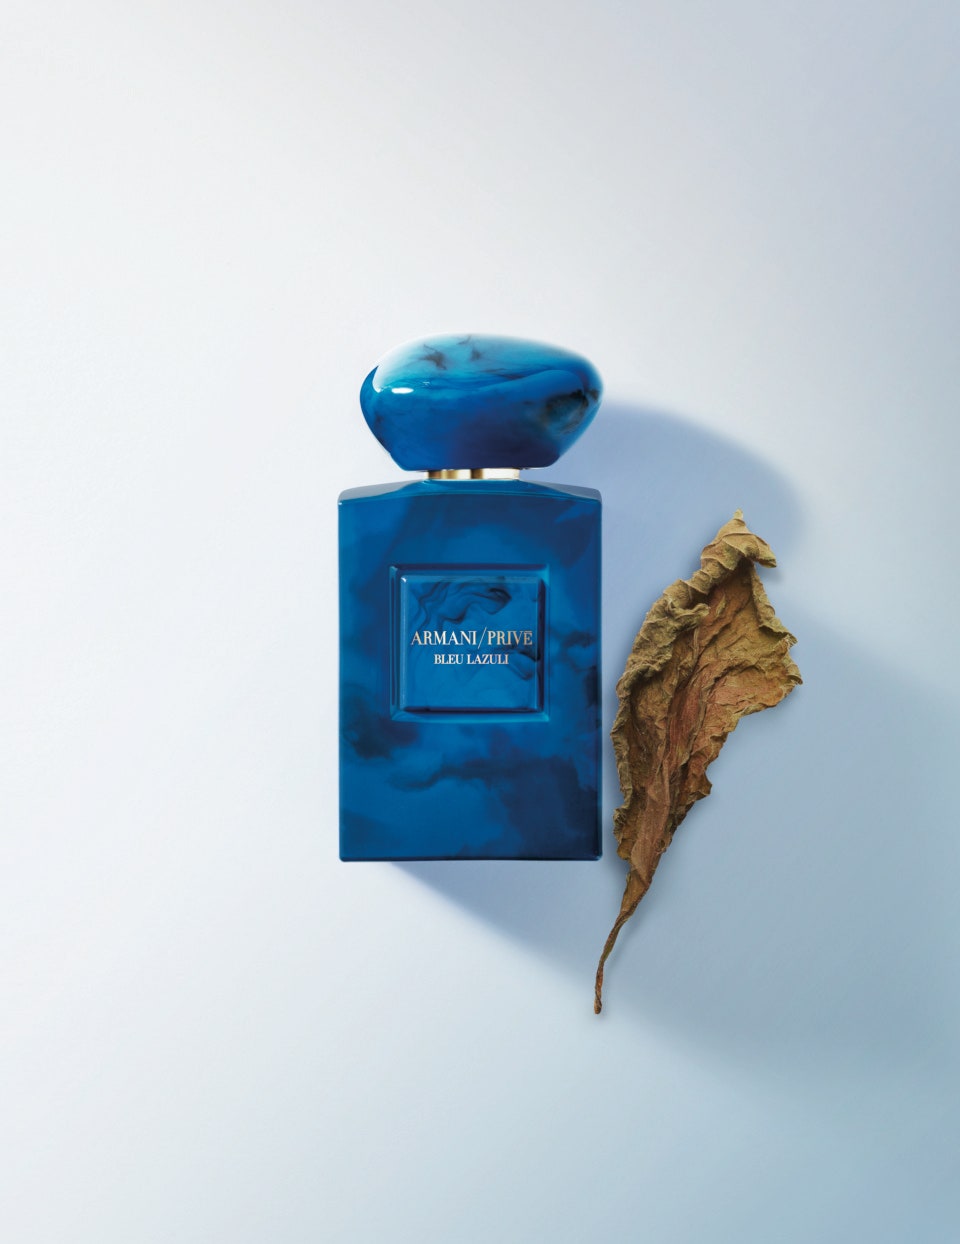 Armani Priv фото ароматов из коллекции La Collection des Terres Prcieuses